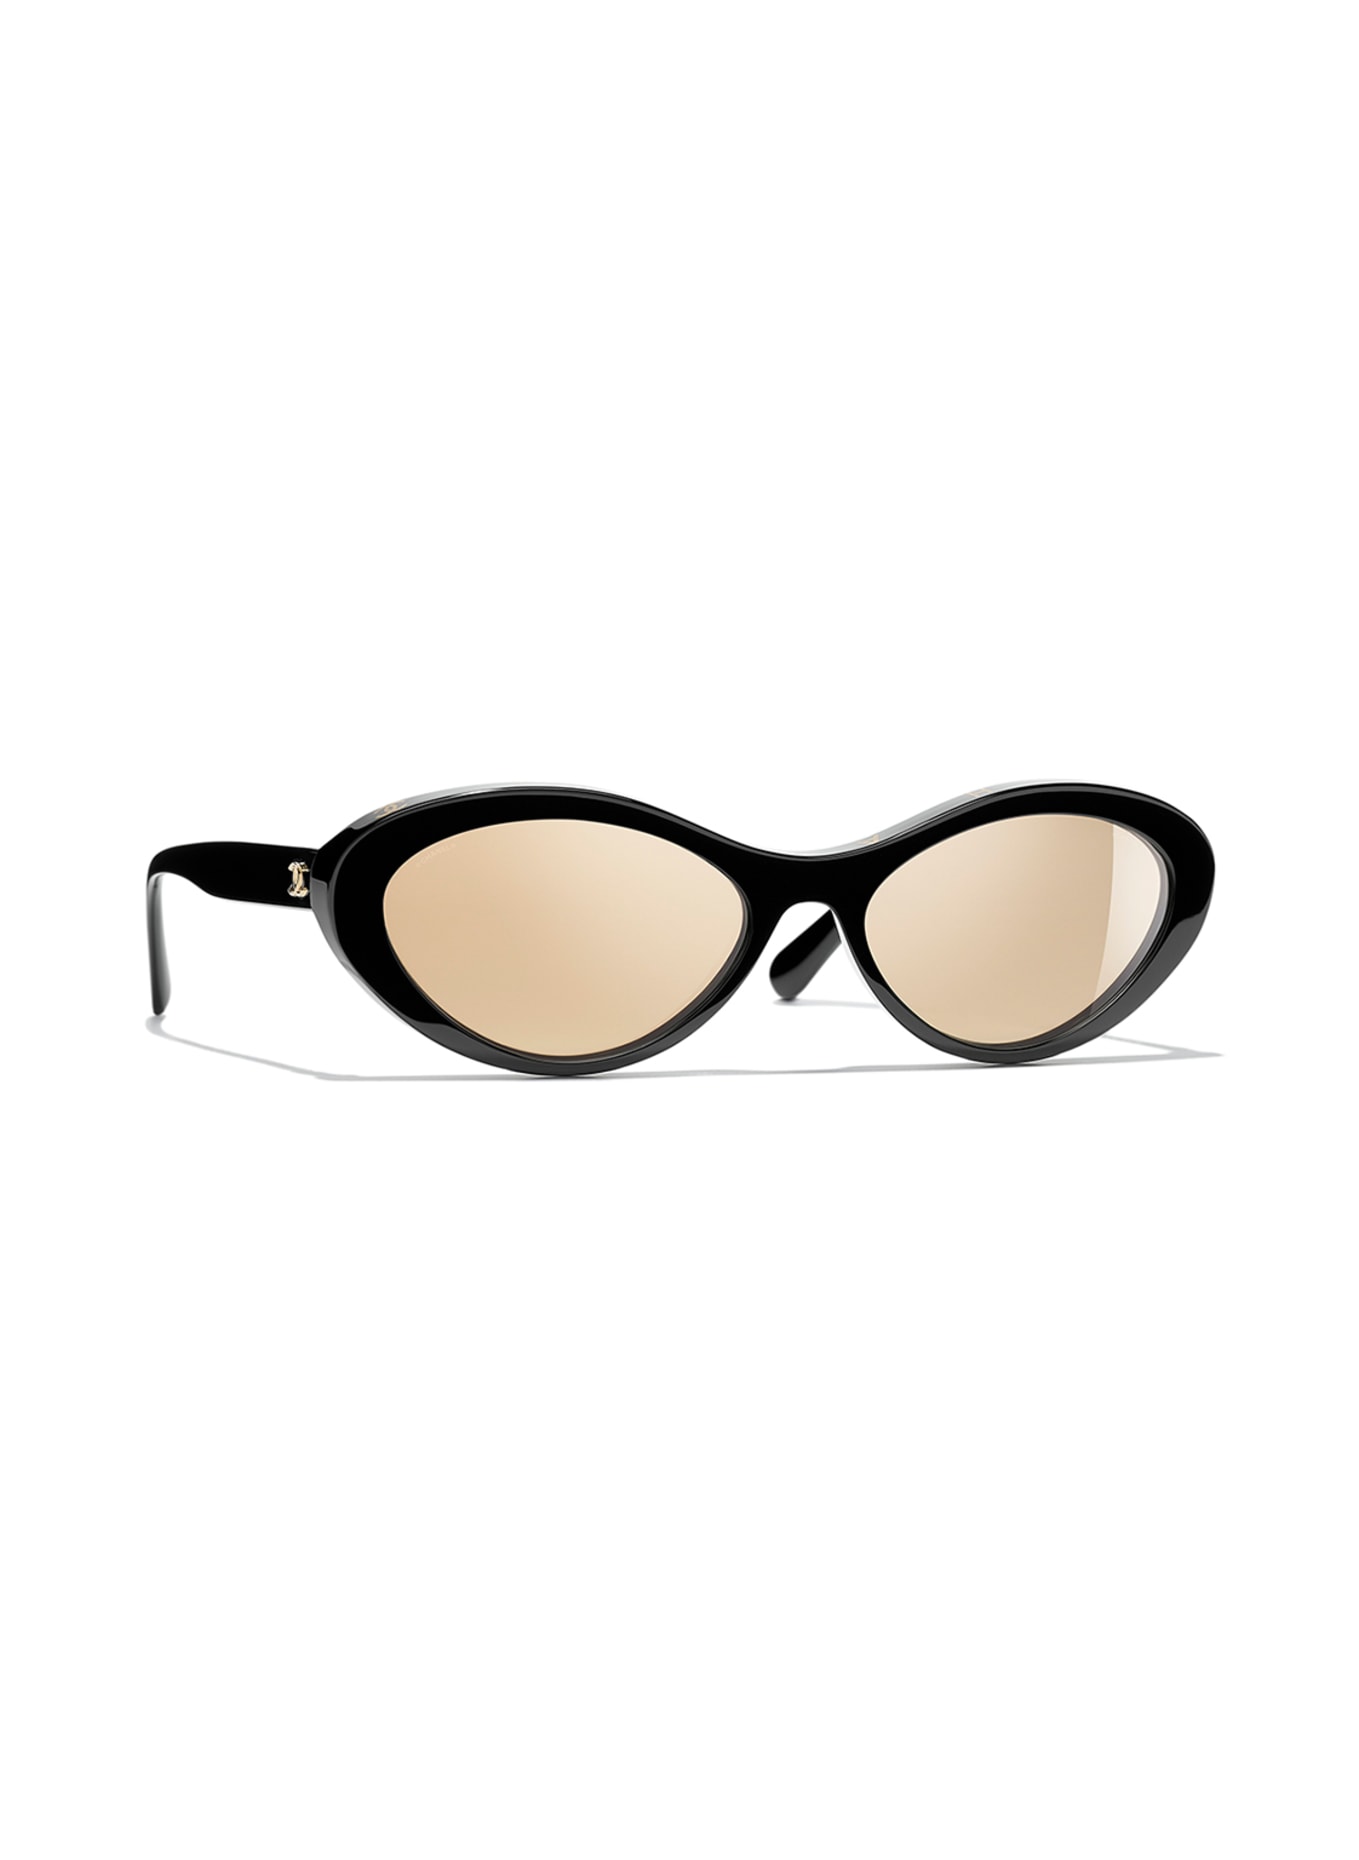 Sunglasses Cat Eye Sunglasses acetate  Fashion  CHANEL